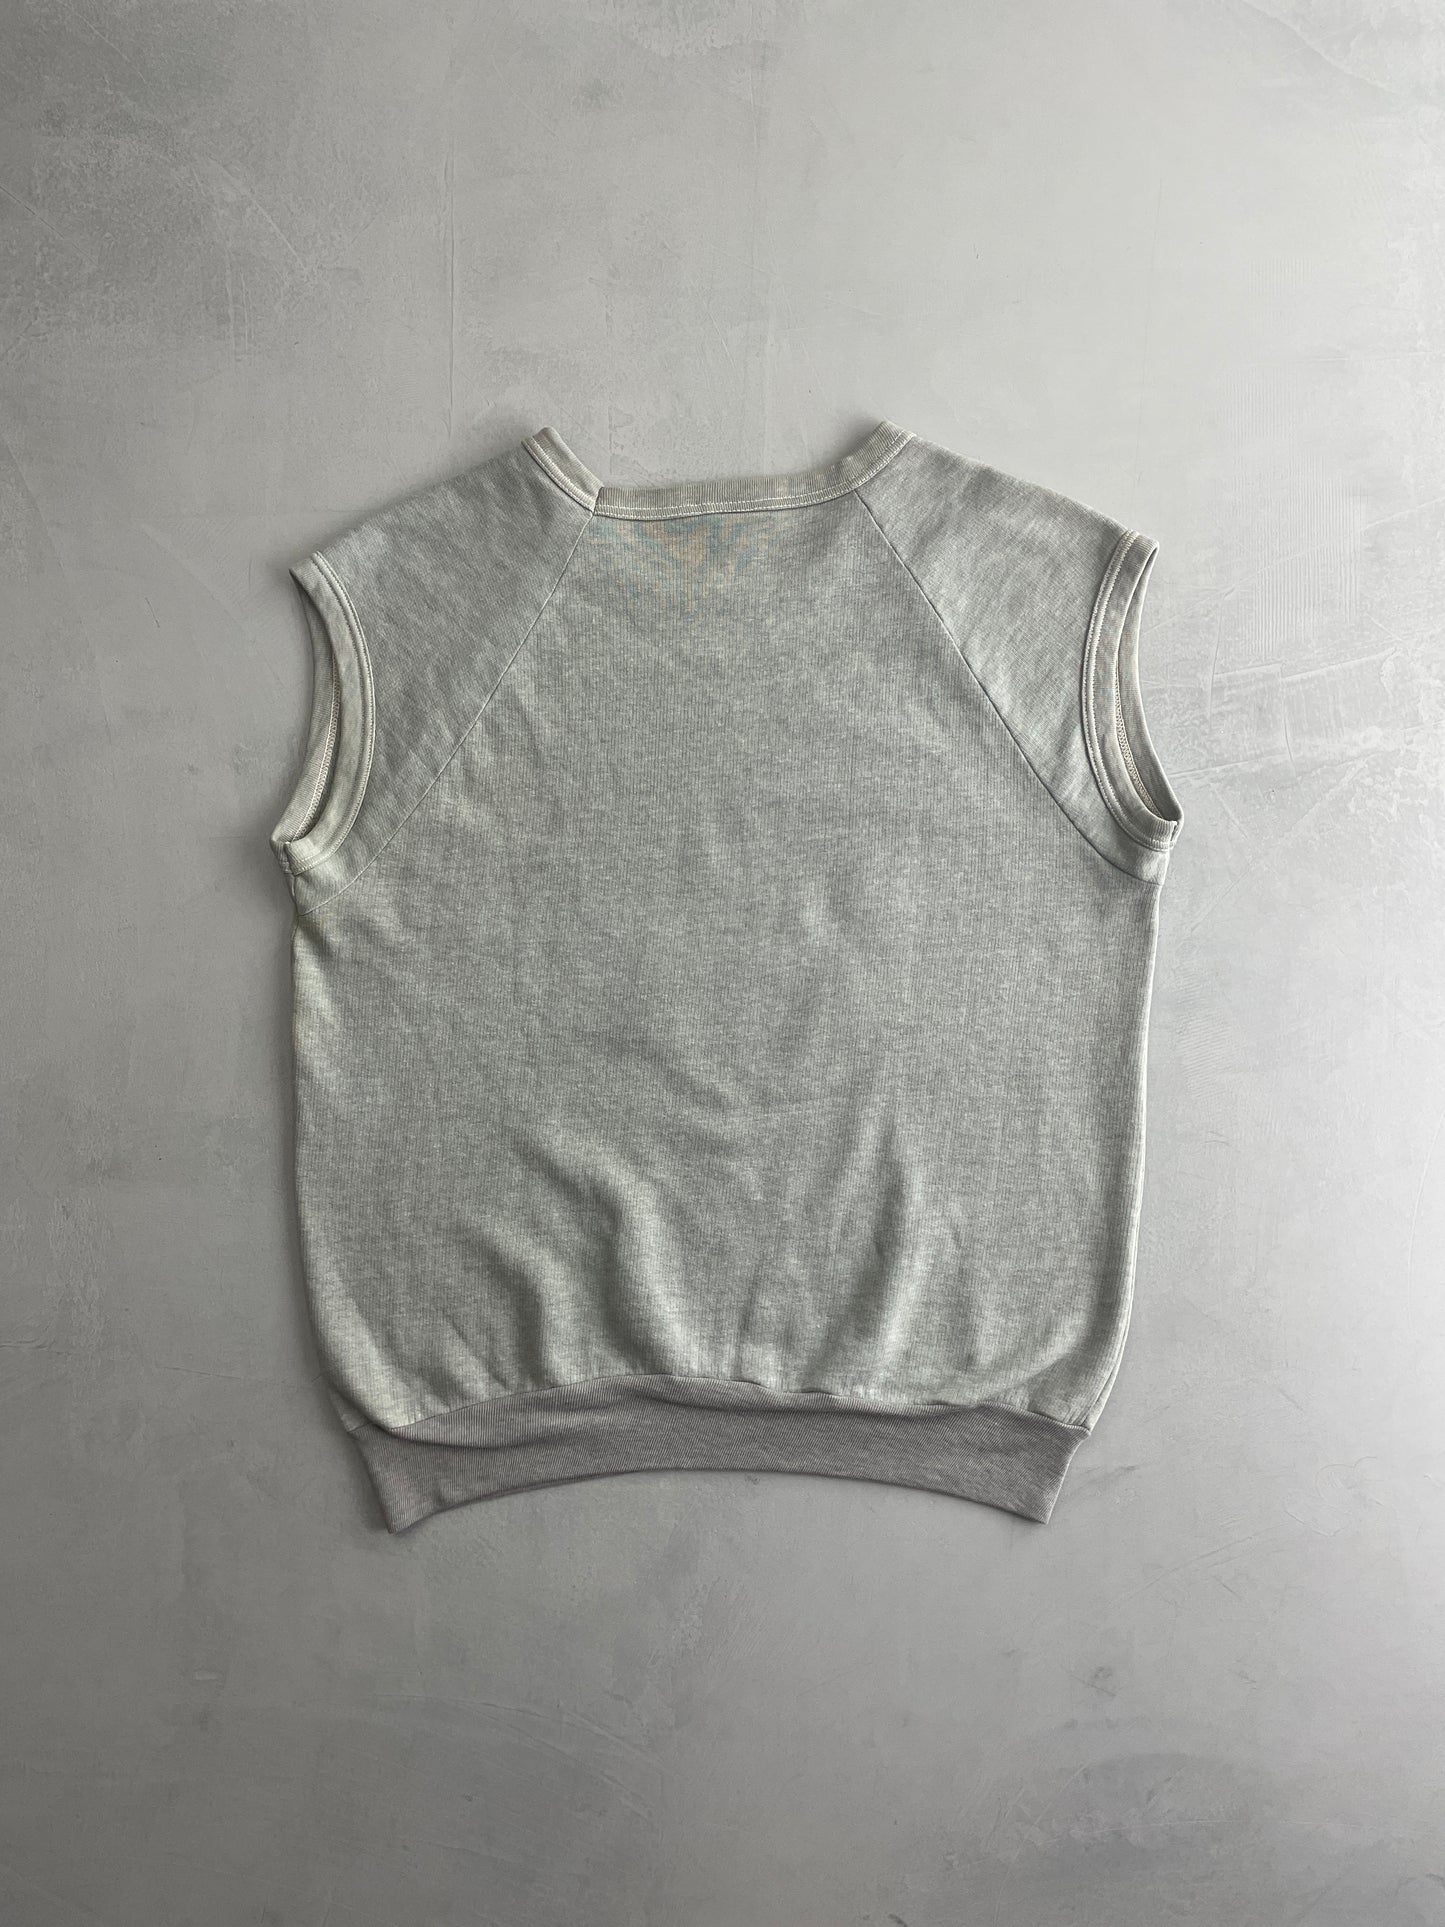 'High Roller' Short Sleeve Sweatshirt [M]